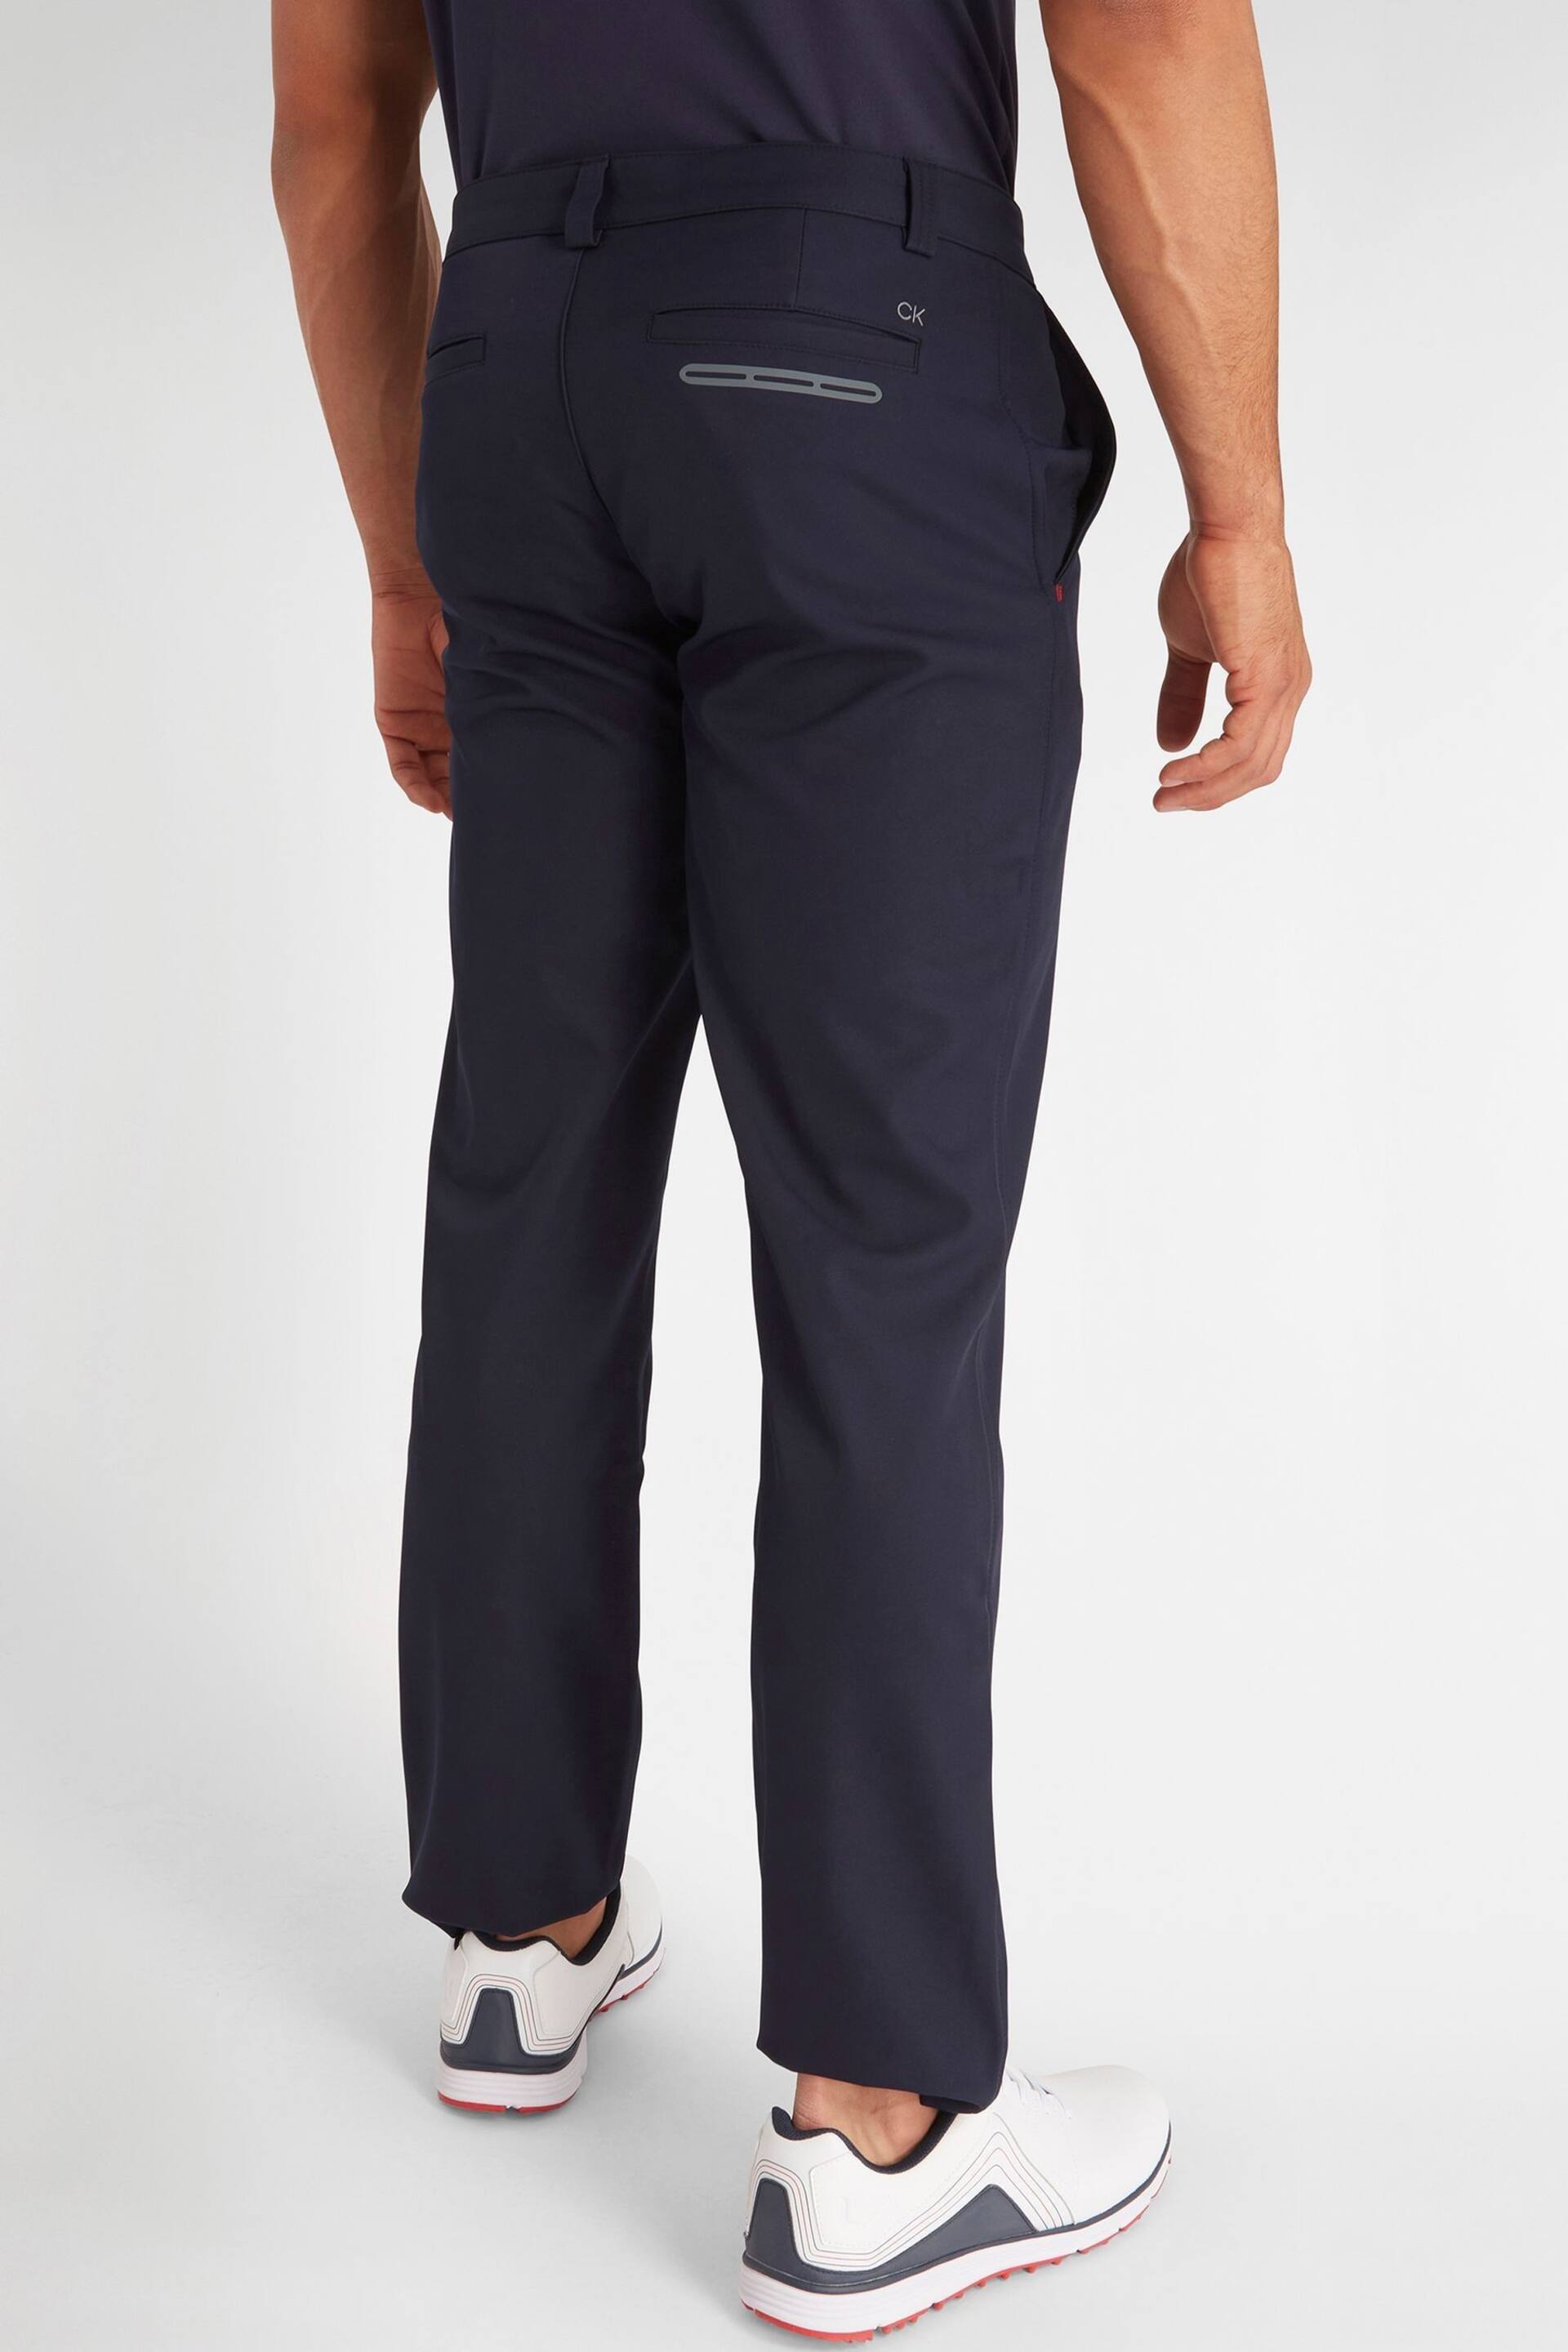 Calvin Klein Golf Black Regular Fit Tech Warm Trousers - Image 2 of 8